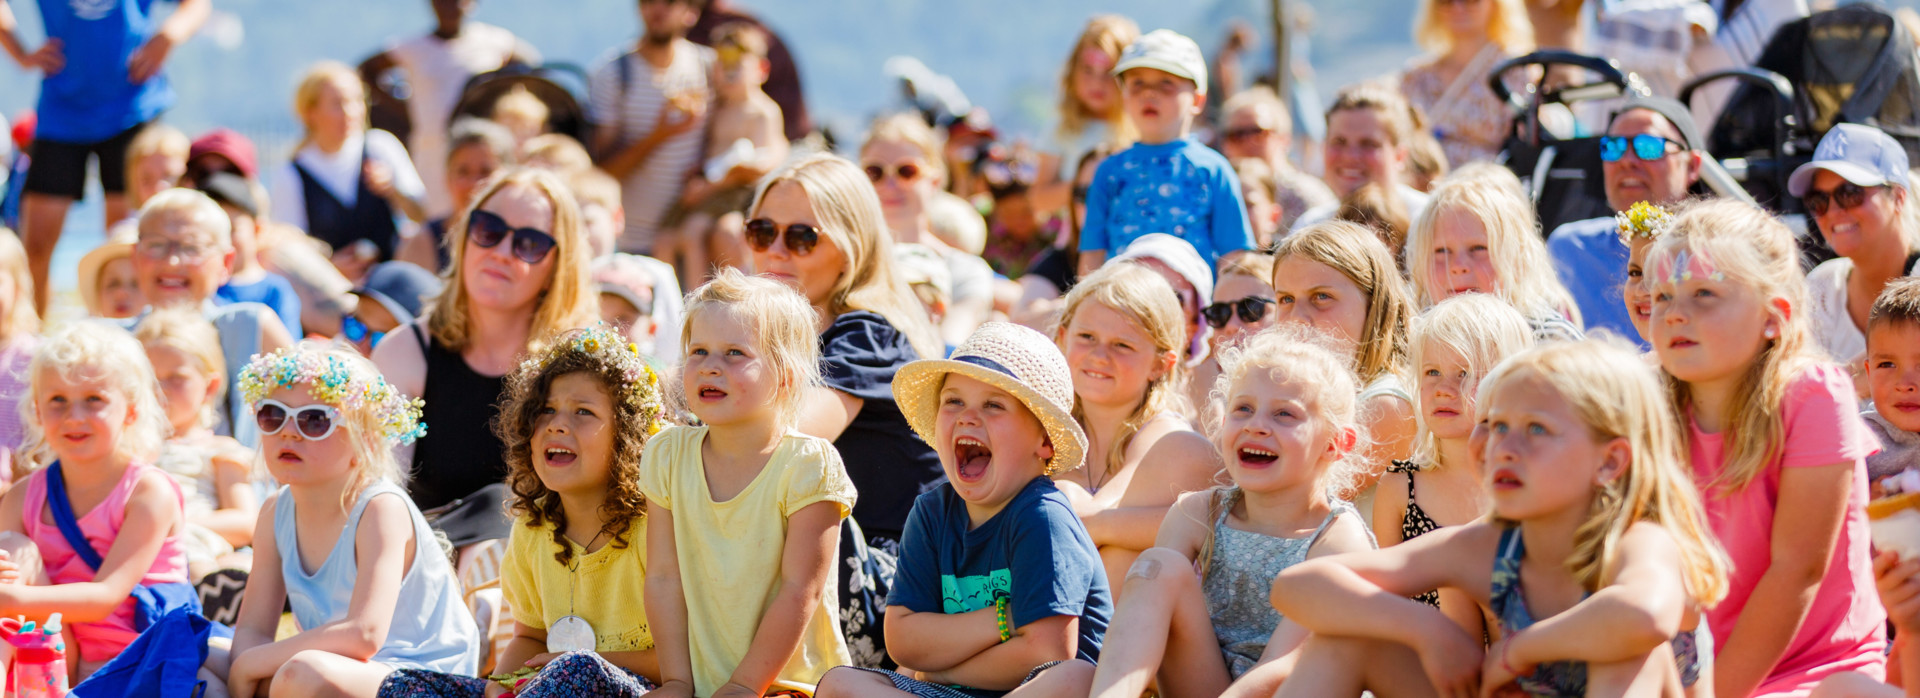 Sjøsprøyt festival - Sparebankstiftelsen Skagerrak